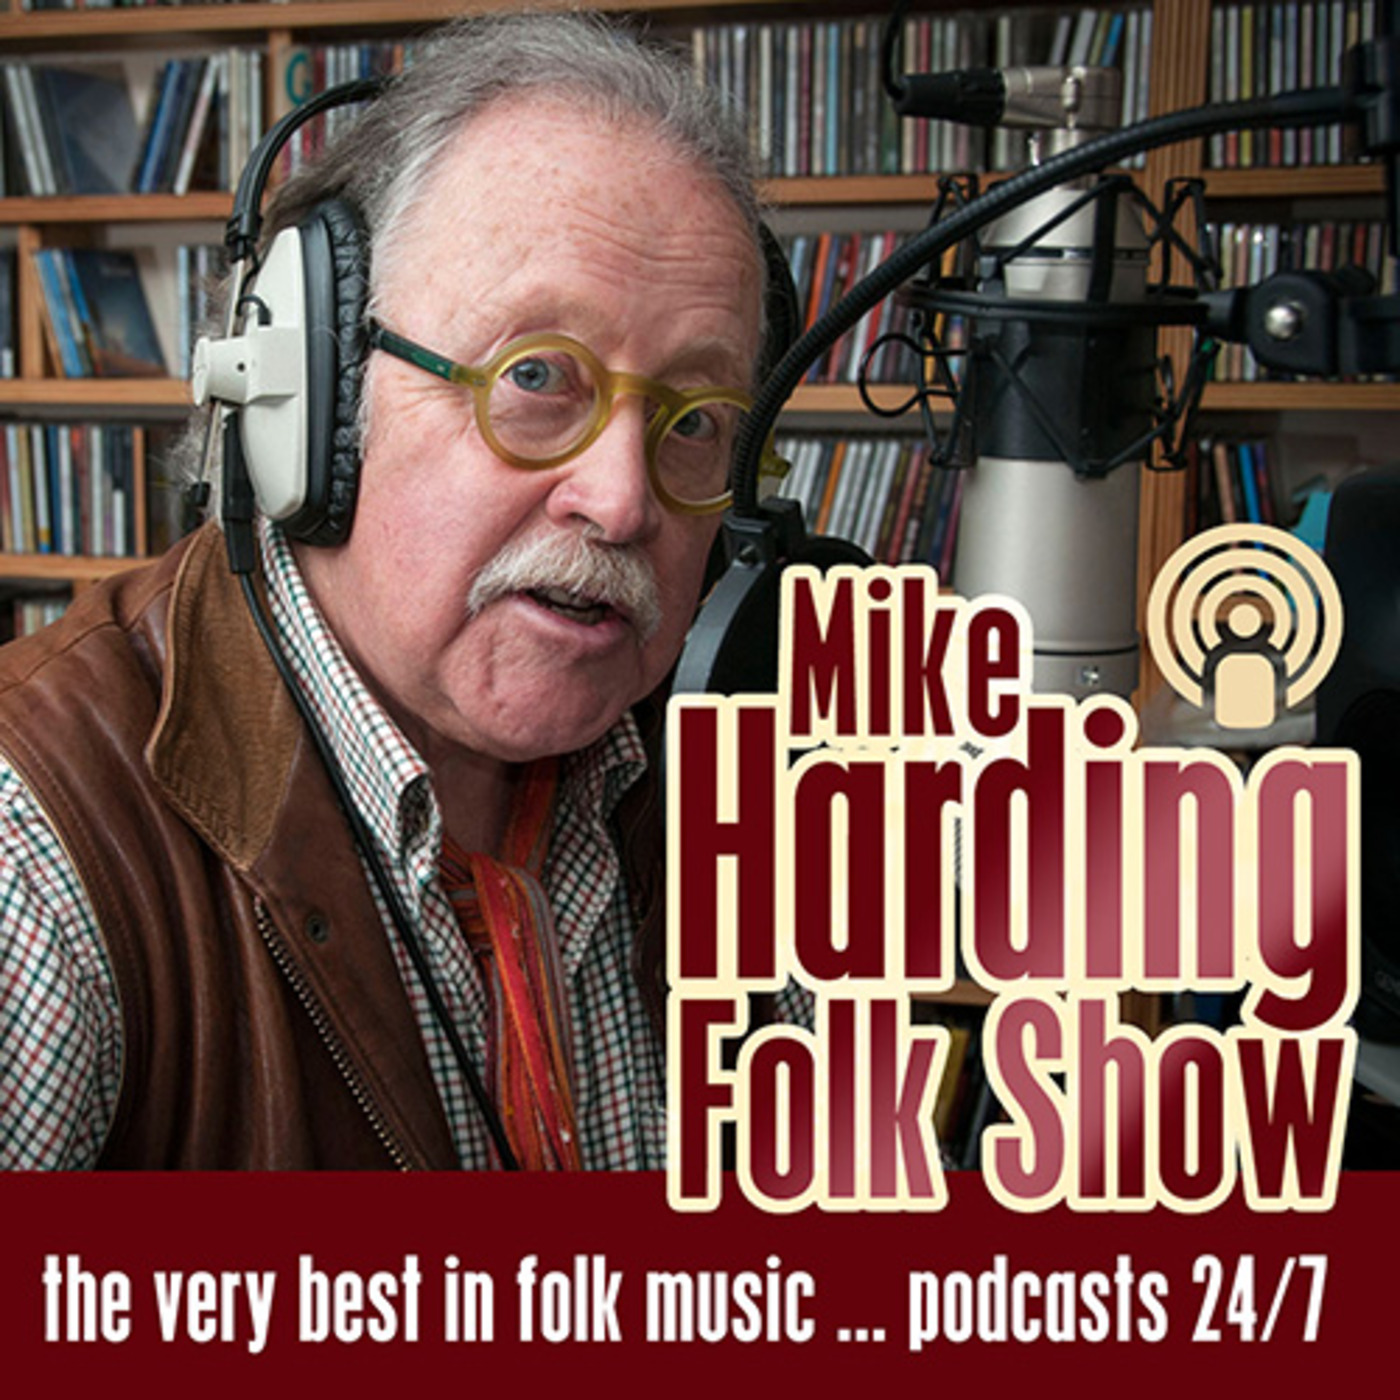 Mike Harding Folk Show 296